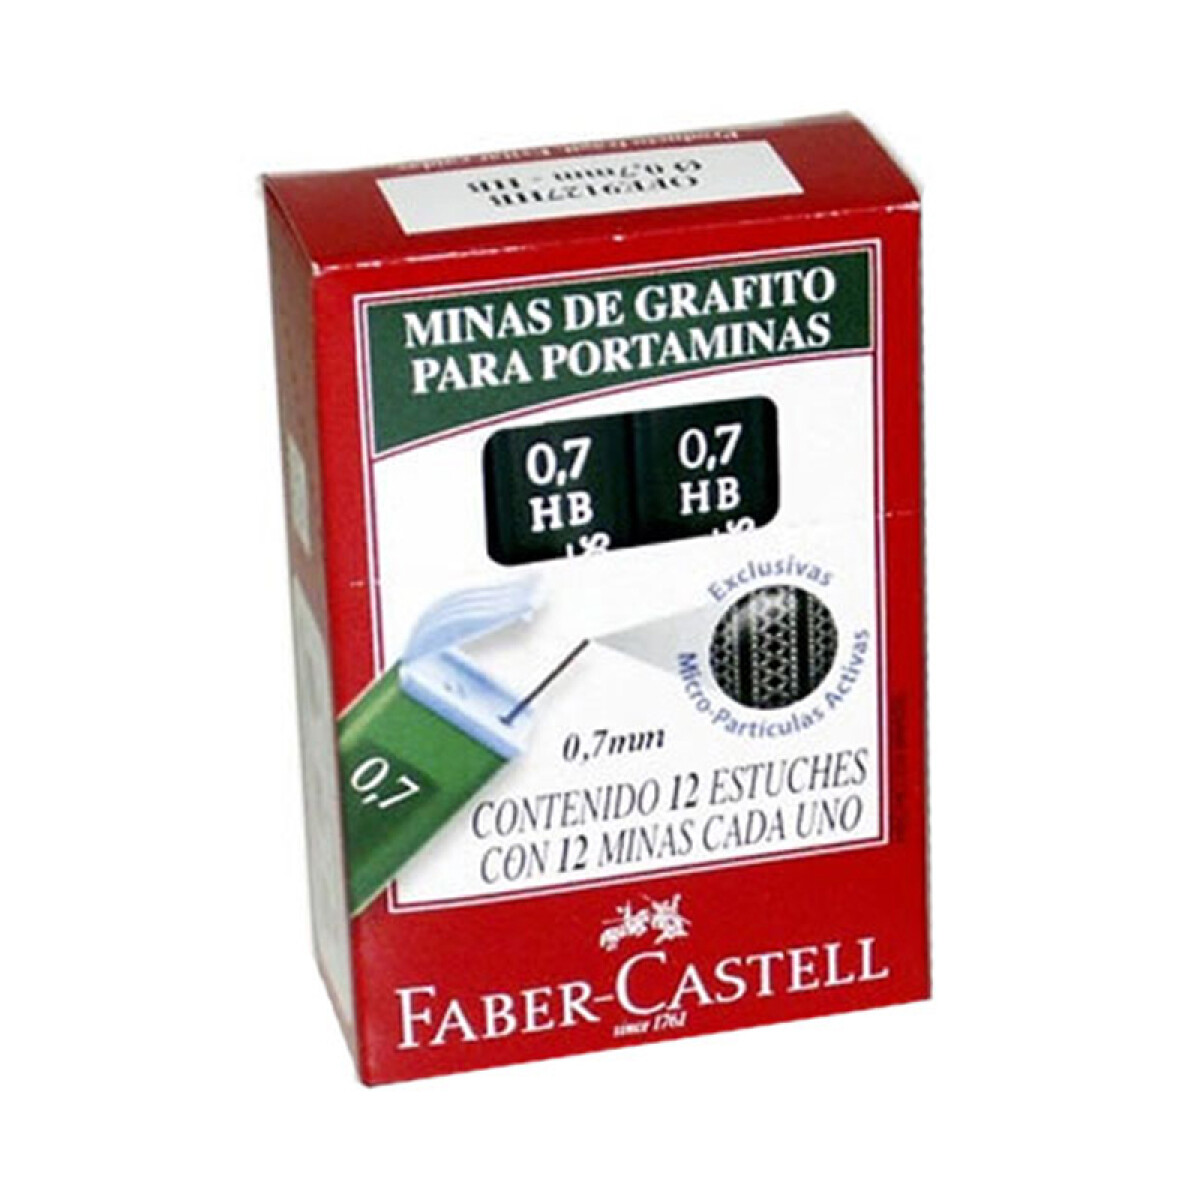 Minas FABER CASTELL - 0.7 HB X12 Unidades 